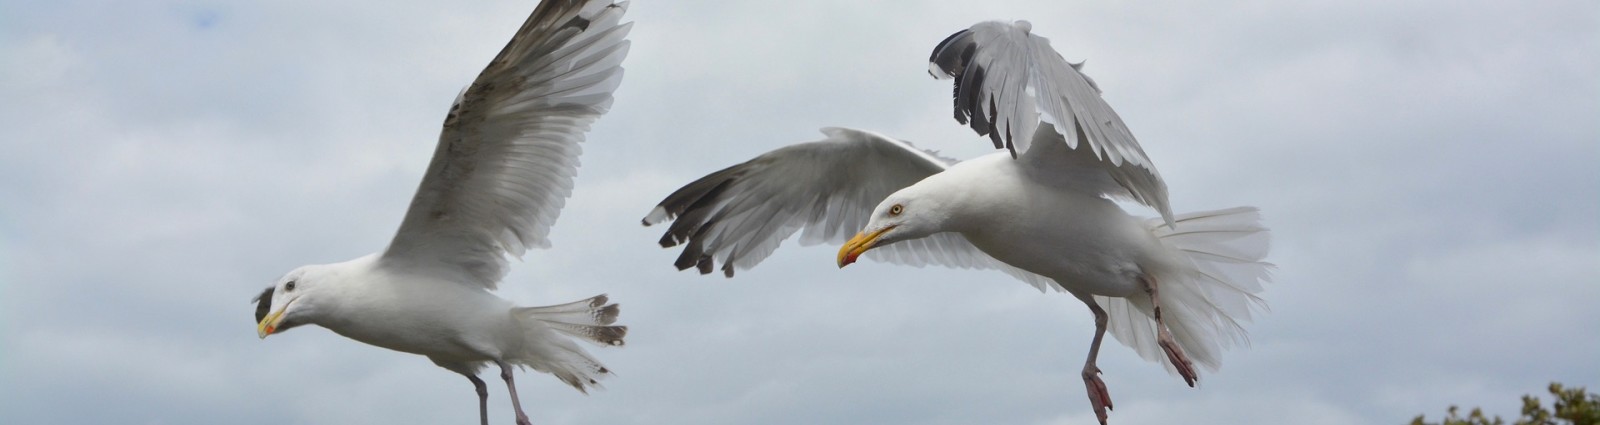 flight of seagulls 2584980 1920